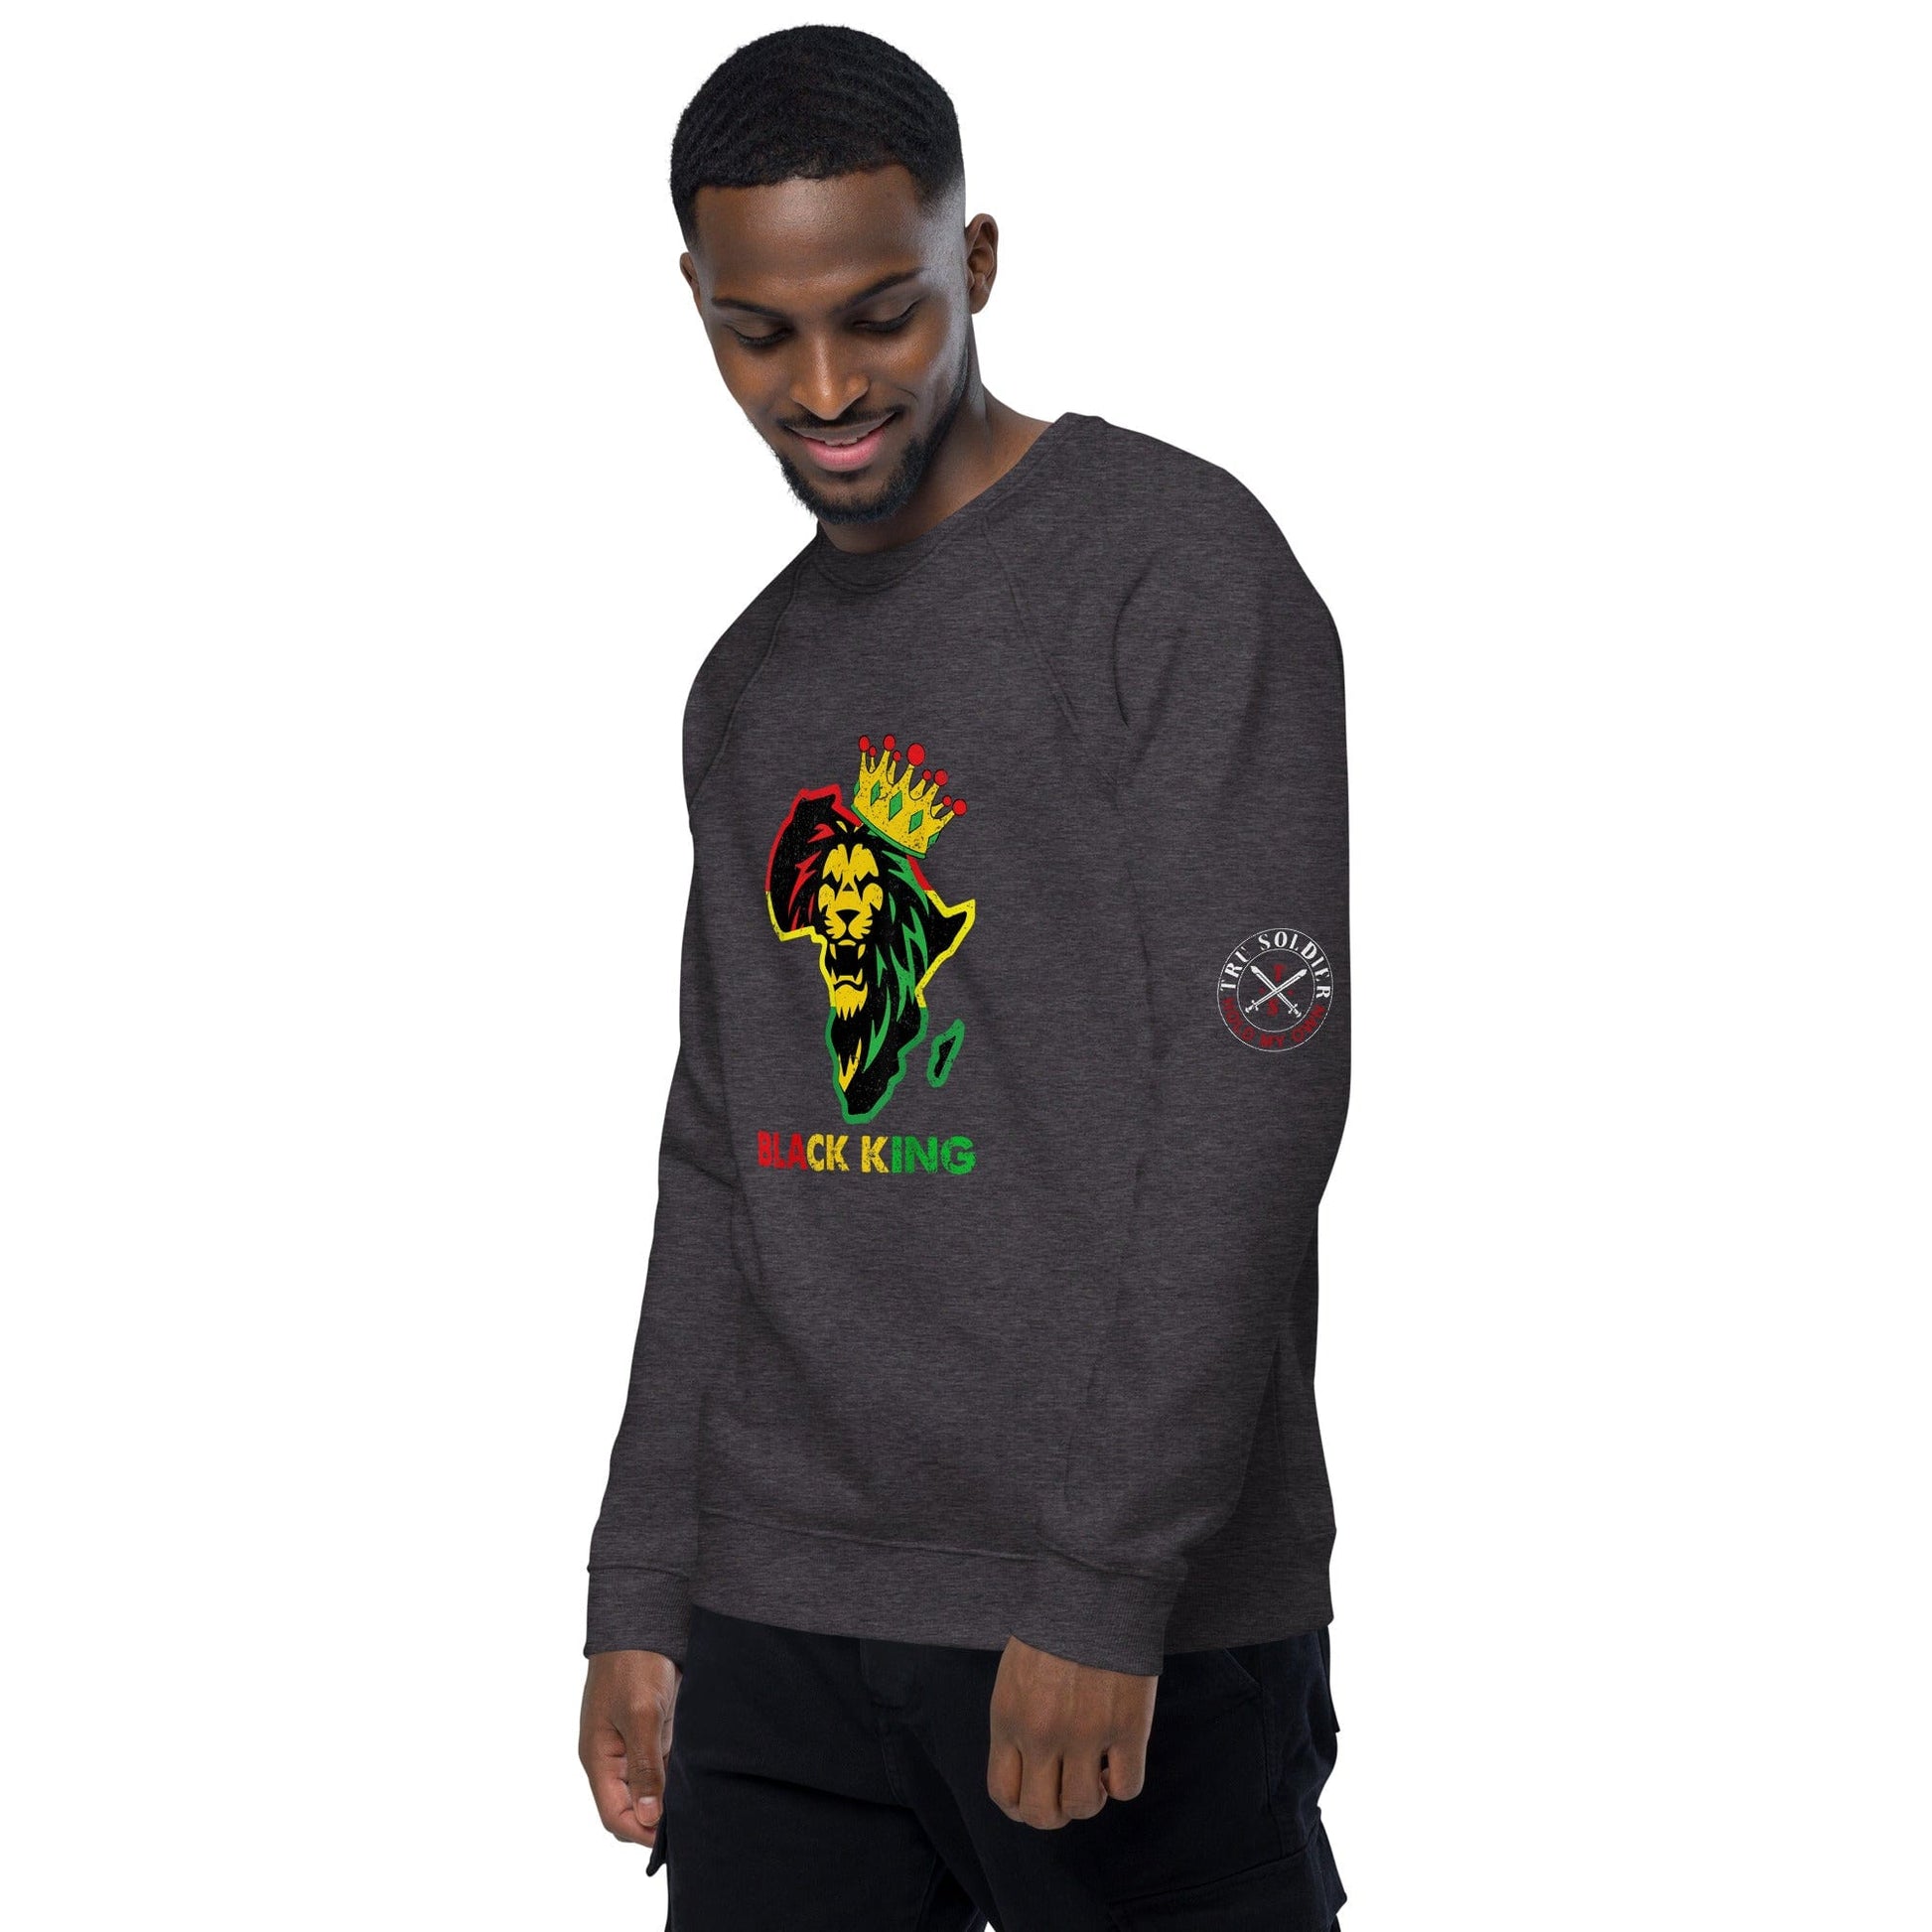 Tru Soldier Sportswear  Black King organic raglan sweatshirt